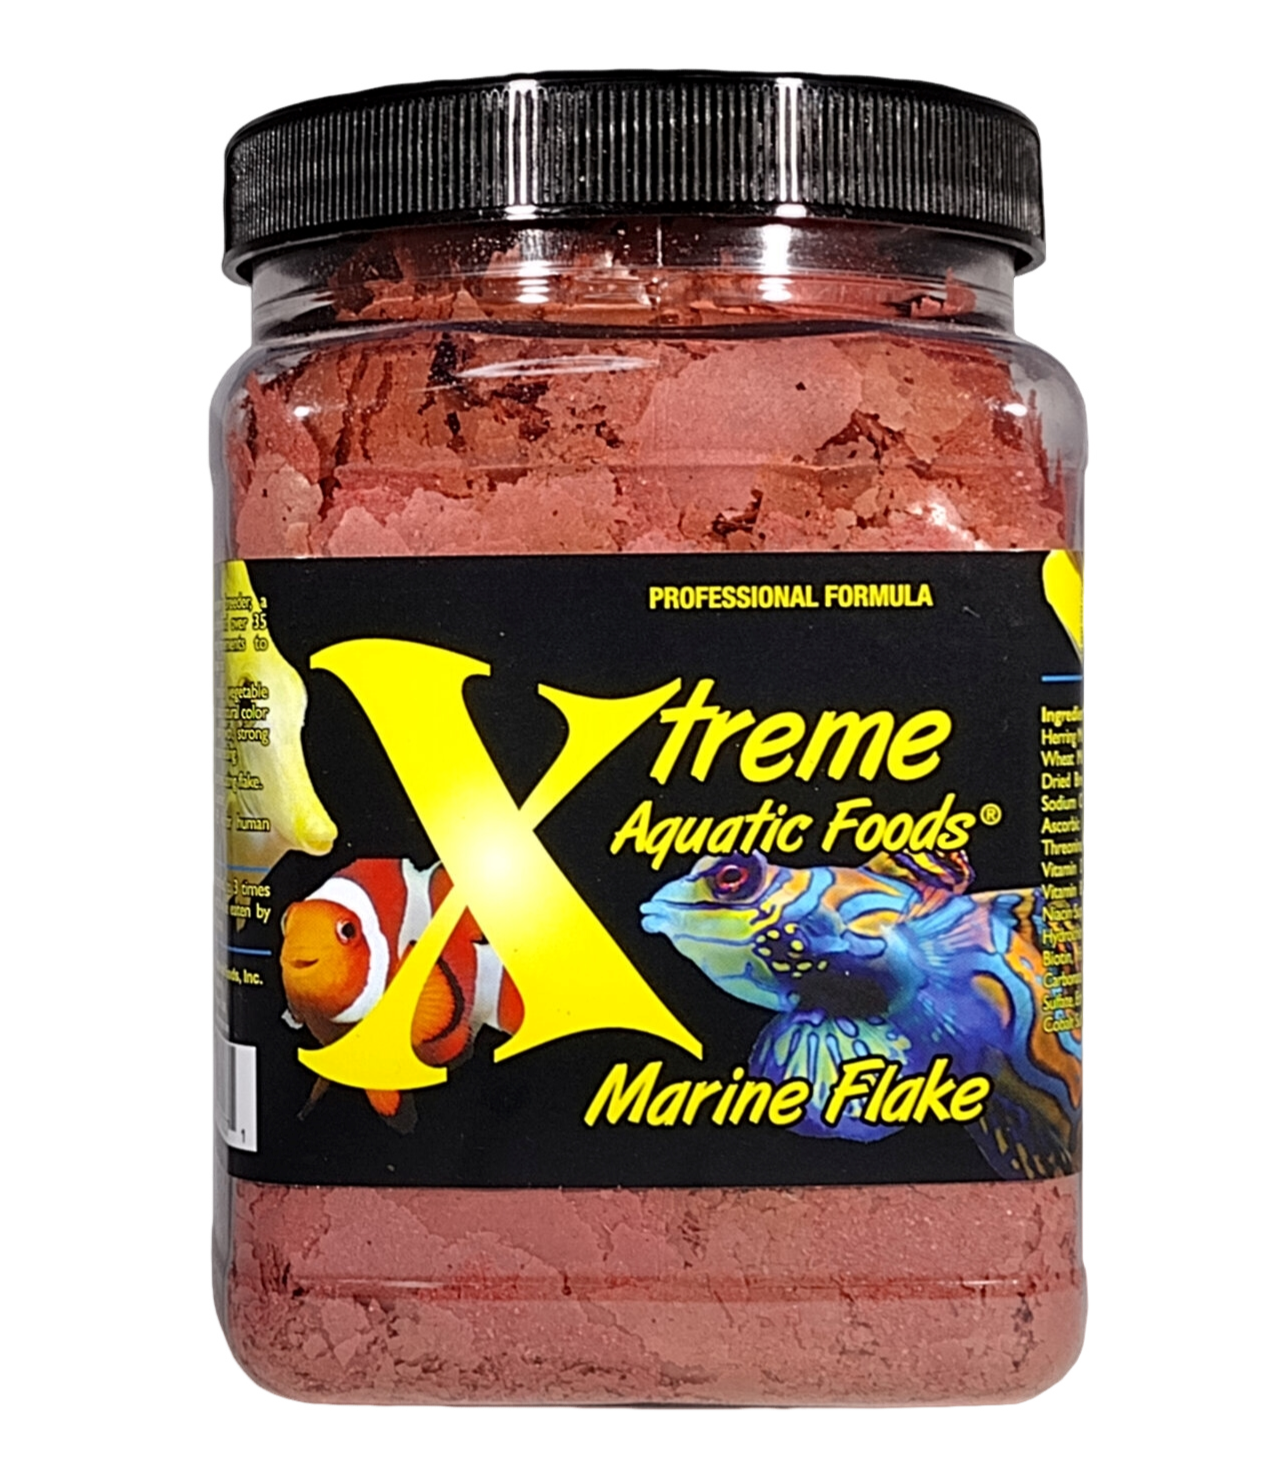 Xtreme Marine Flake